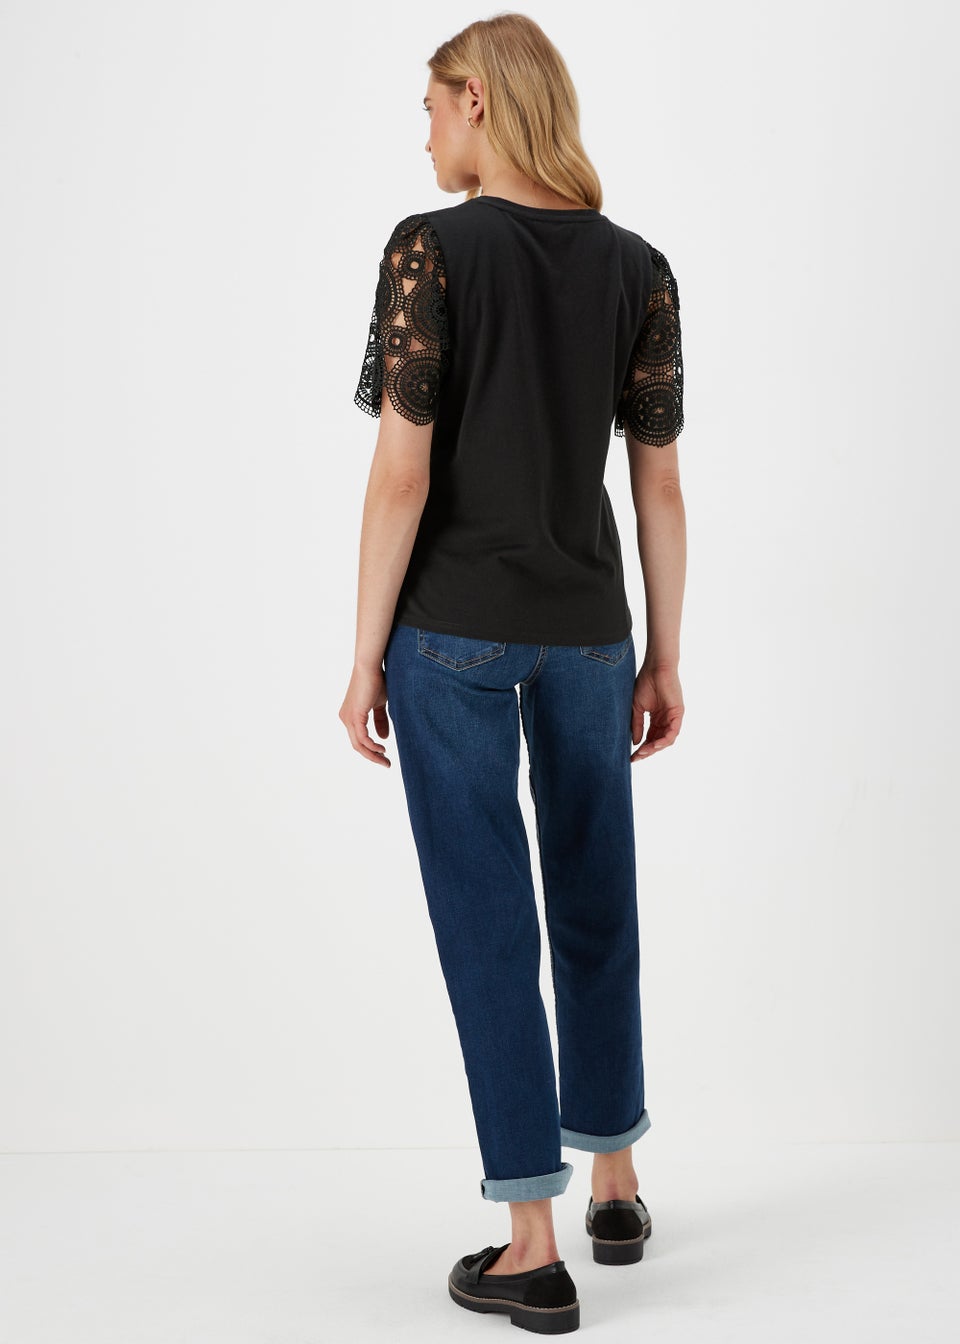 Black Lace T-Shirt - Matalan